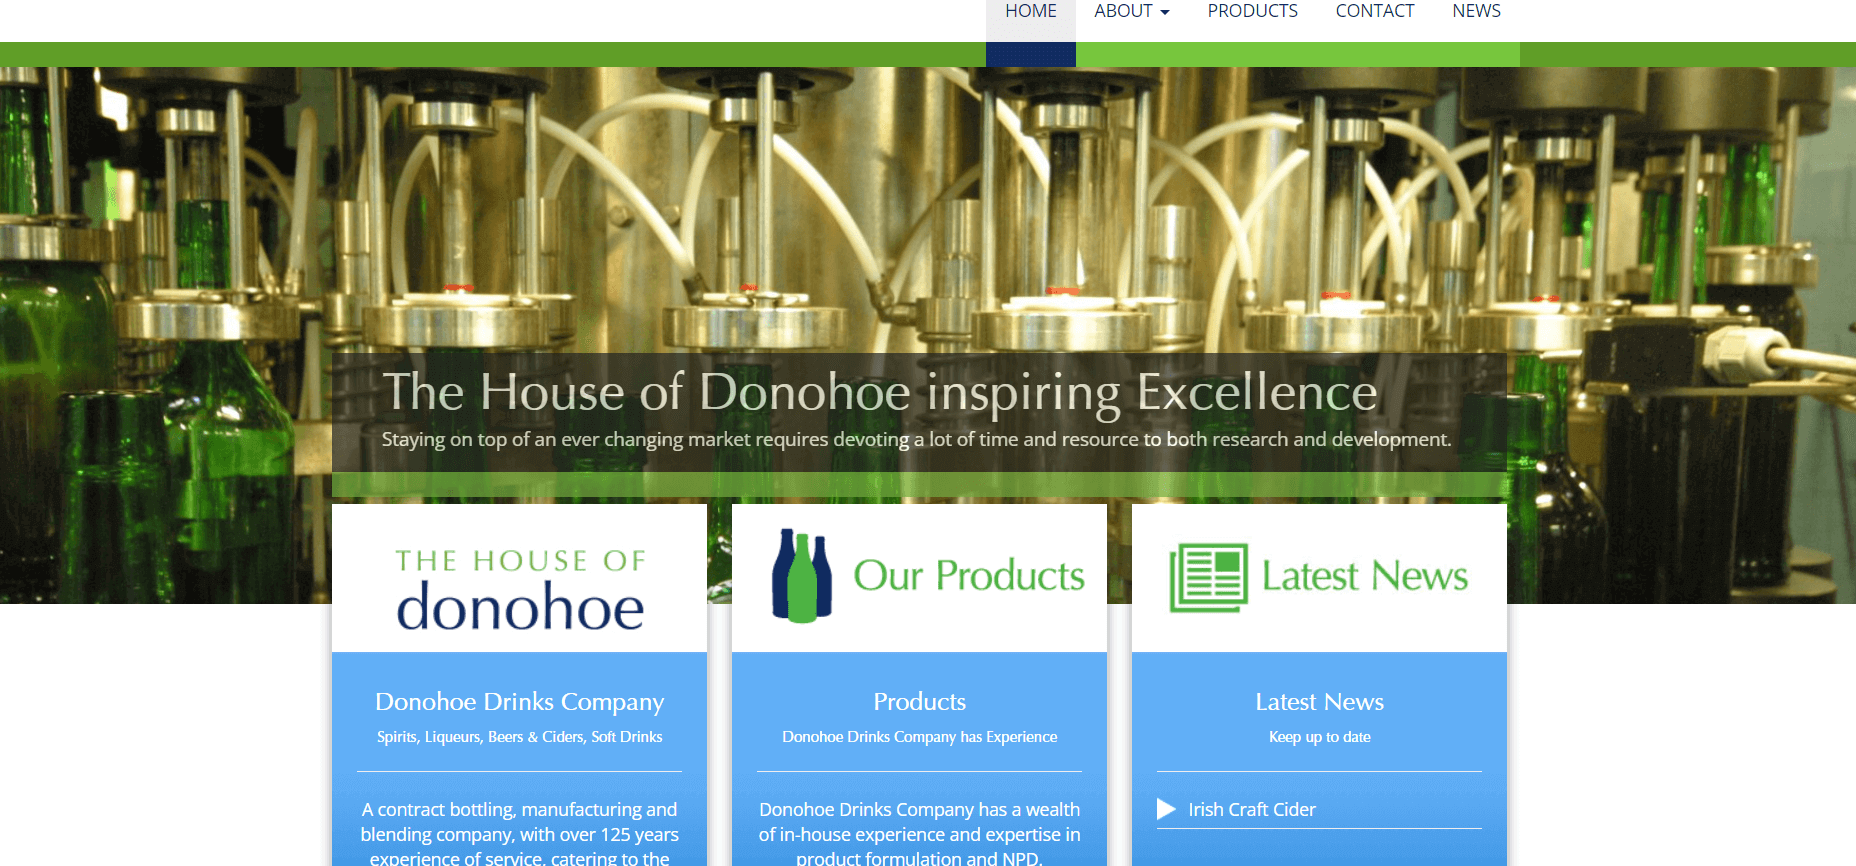 Donohoe Drinks Company